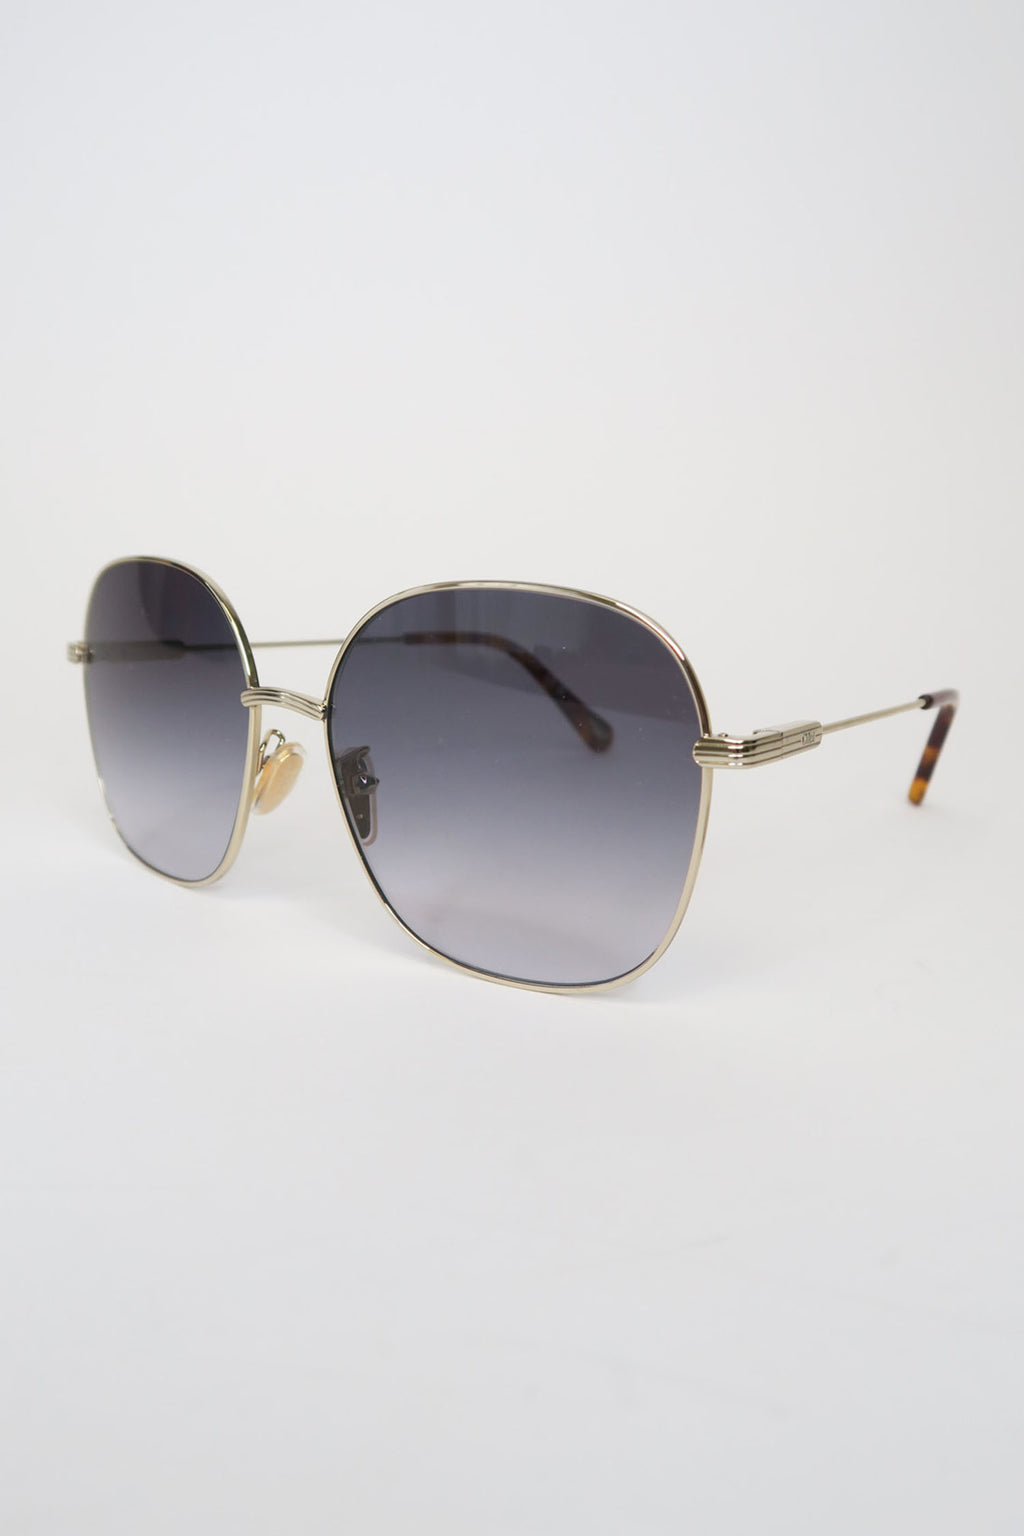 Chloé Oversized Gradient Sunglasses